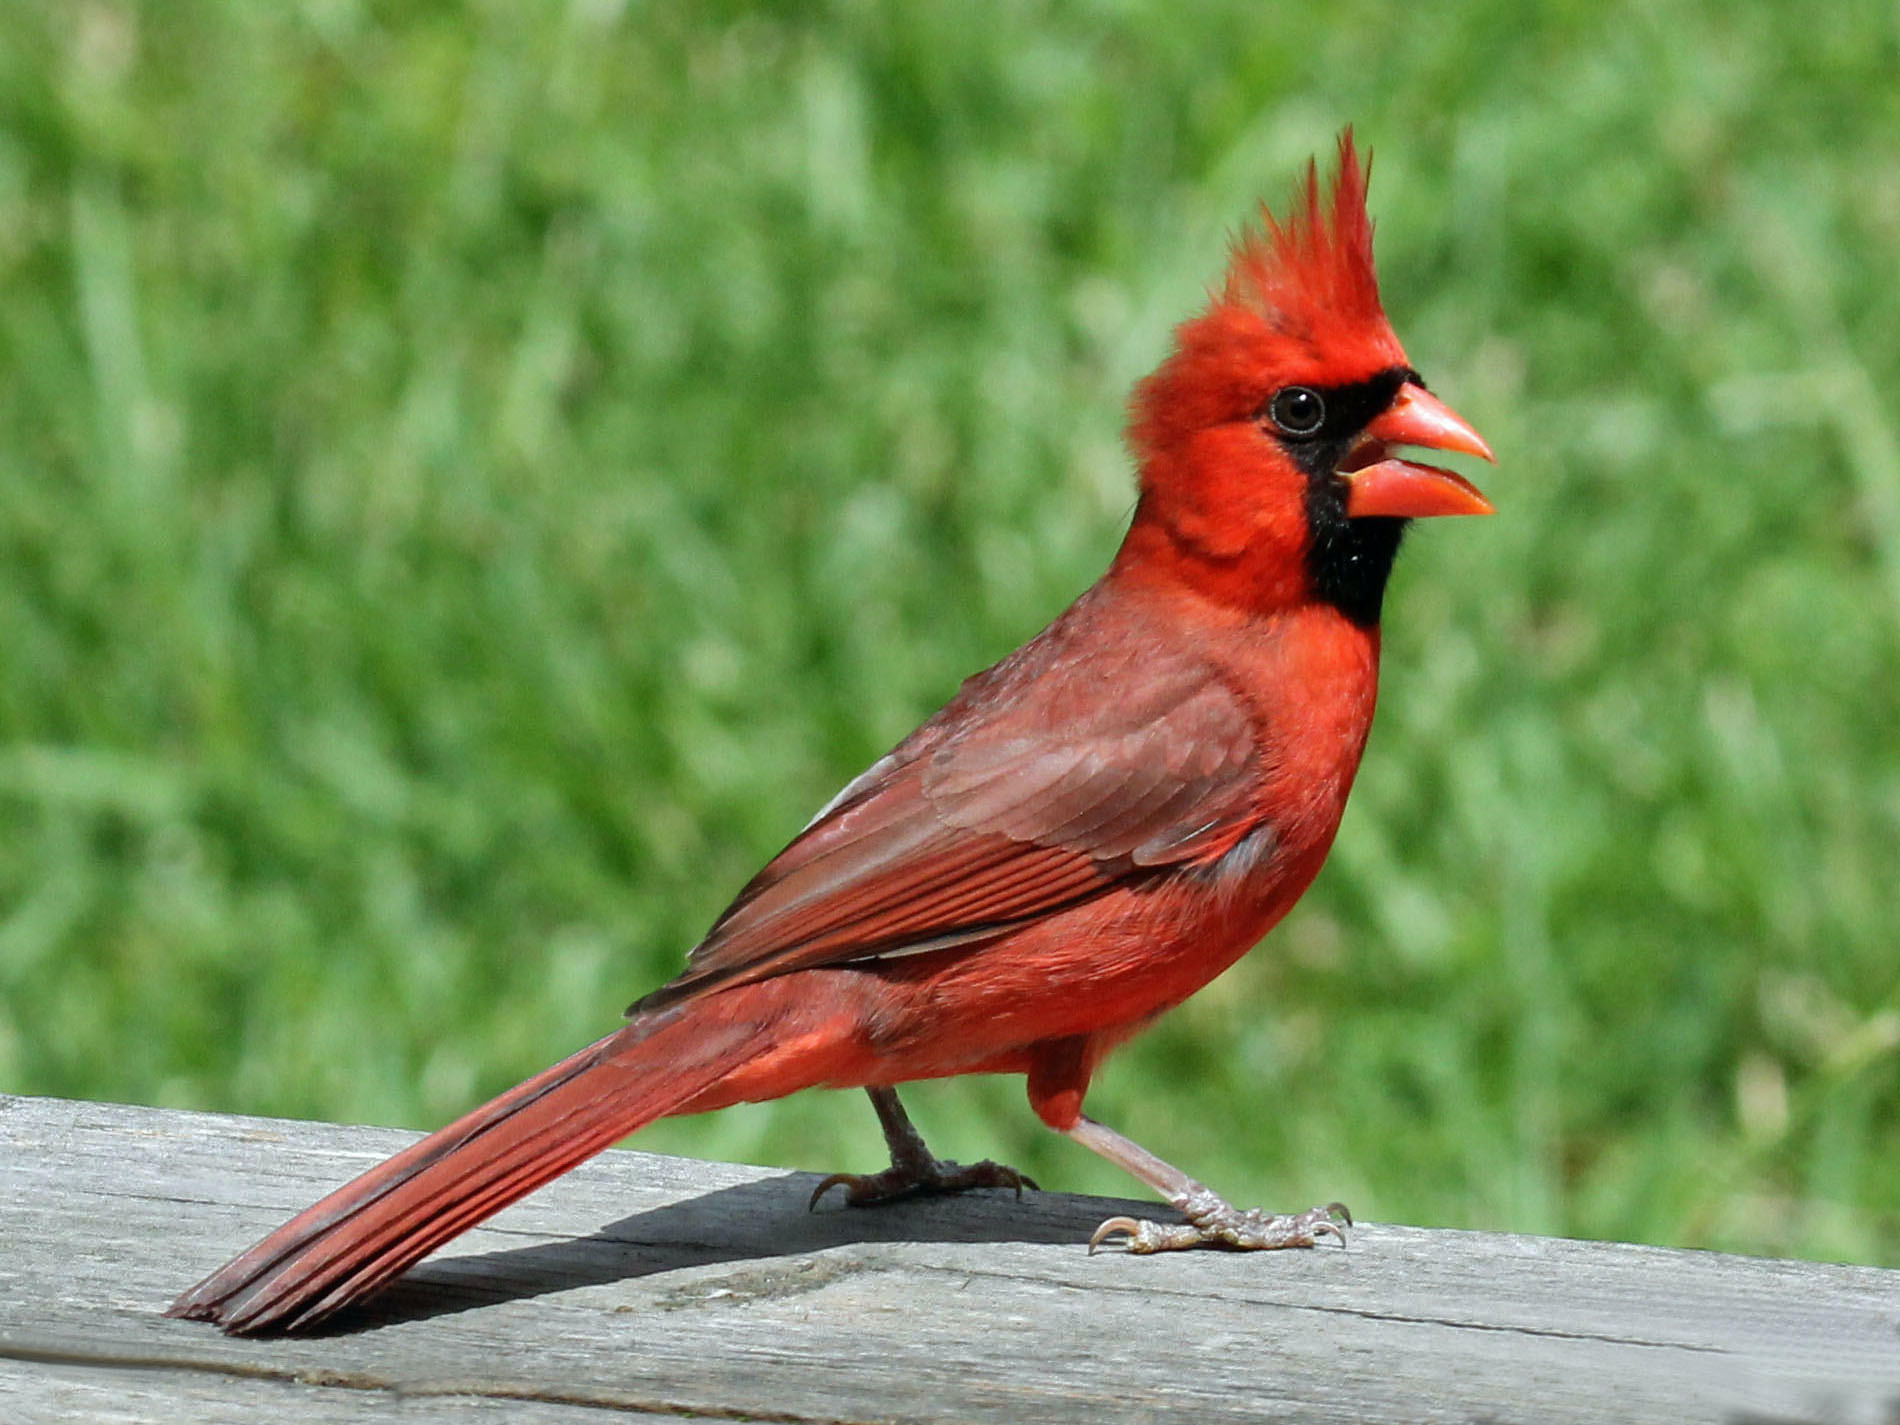 Red Cardinal By DickDaniels (http://carolinabirds.org/)